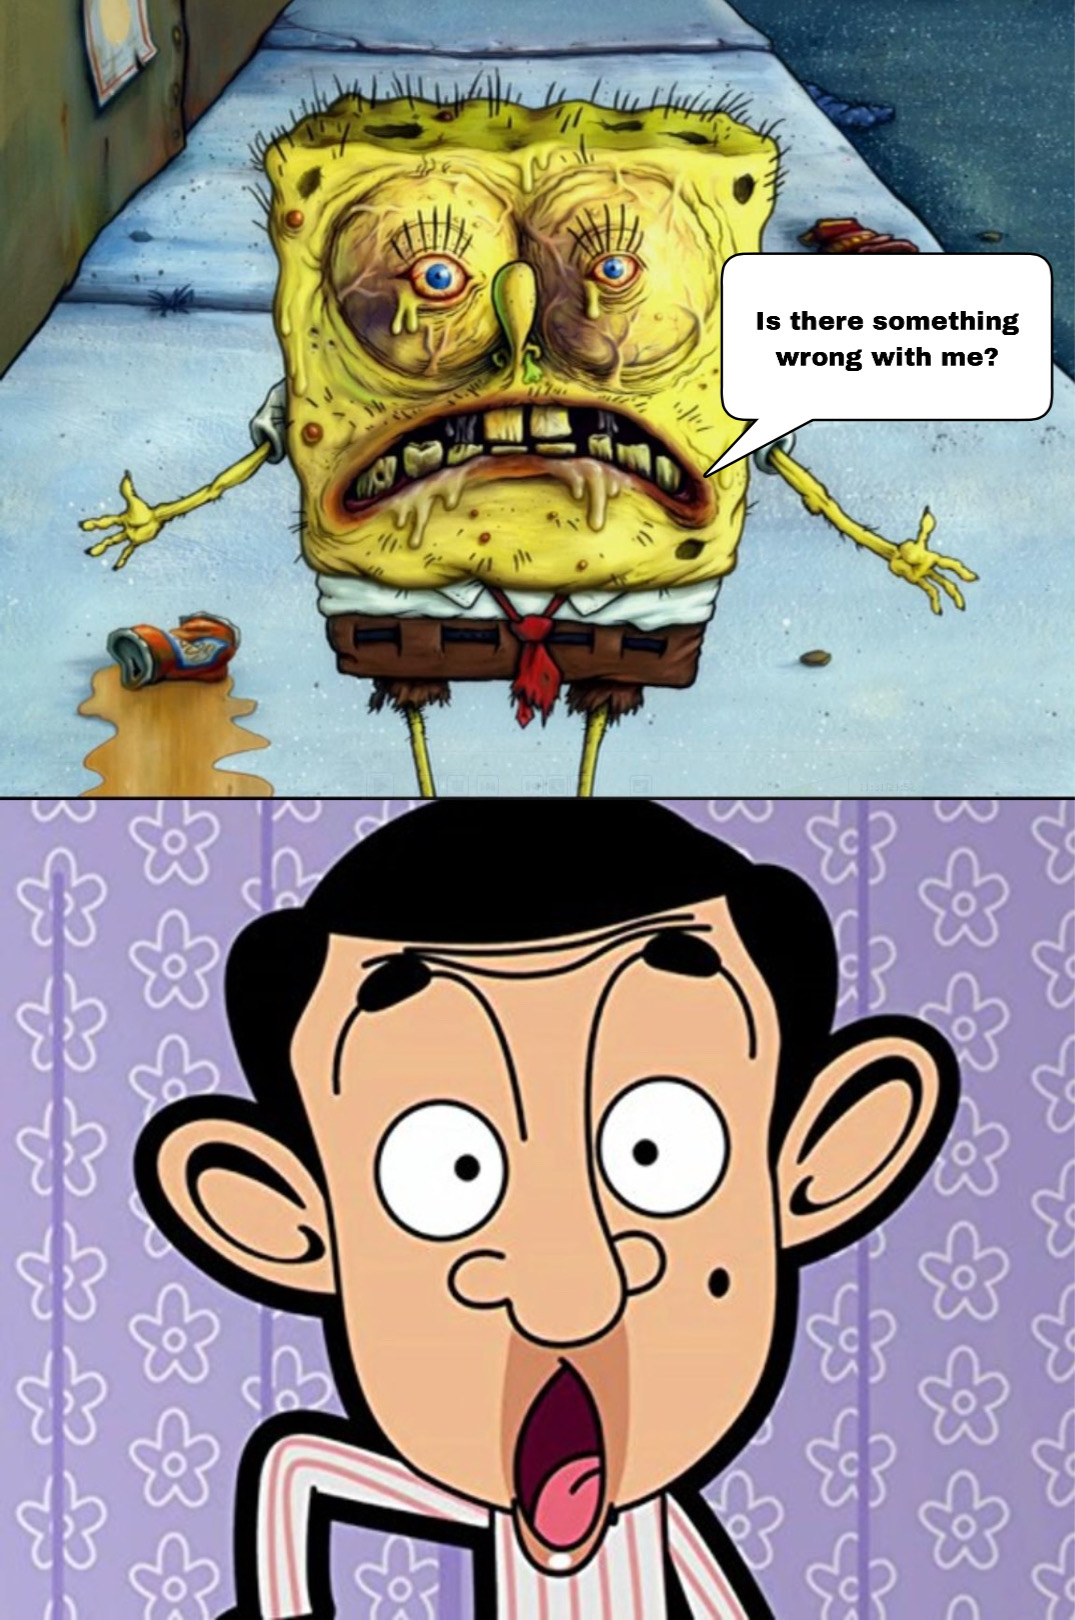 Sad Spongebob by brain-poop on DeviantArt